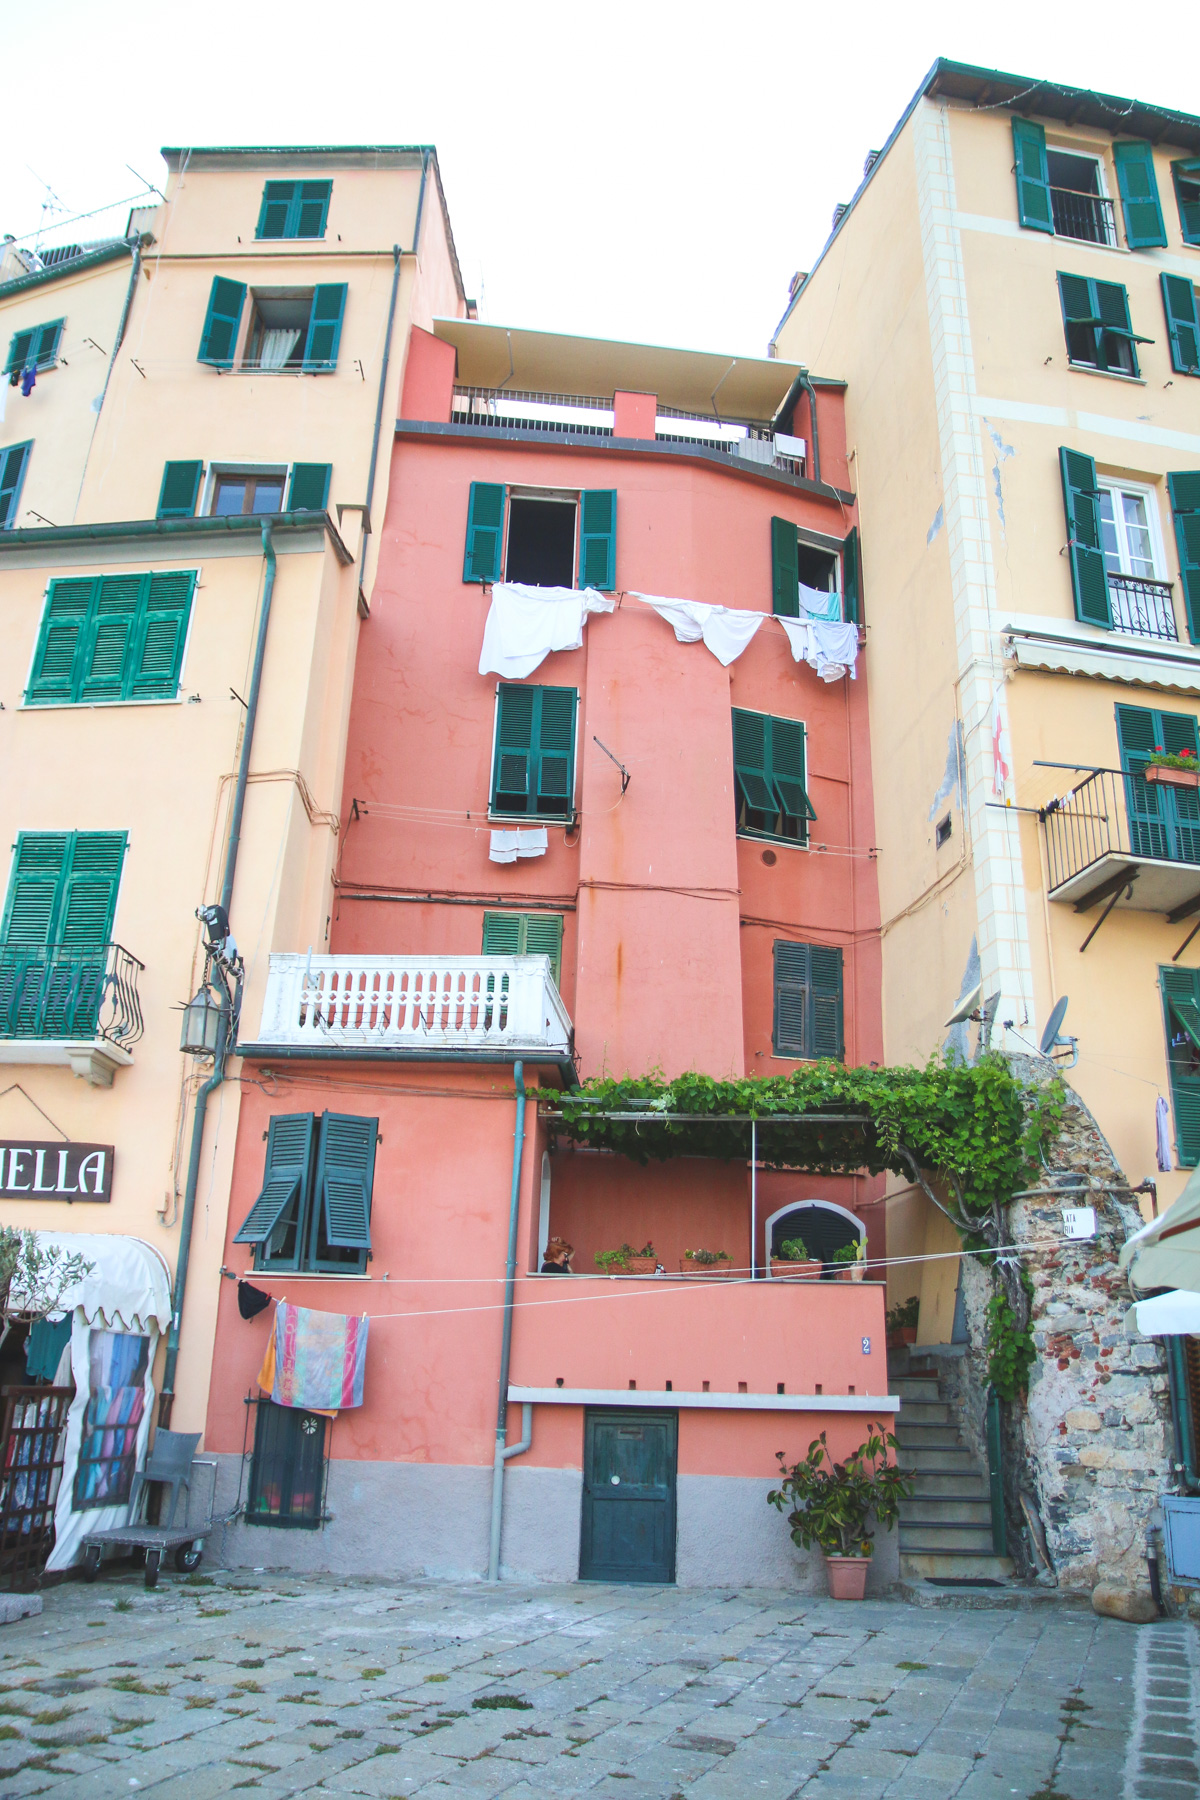 Portovenere Streets, Cinque Terre, Liguria, Italy